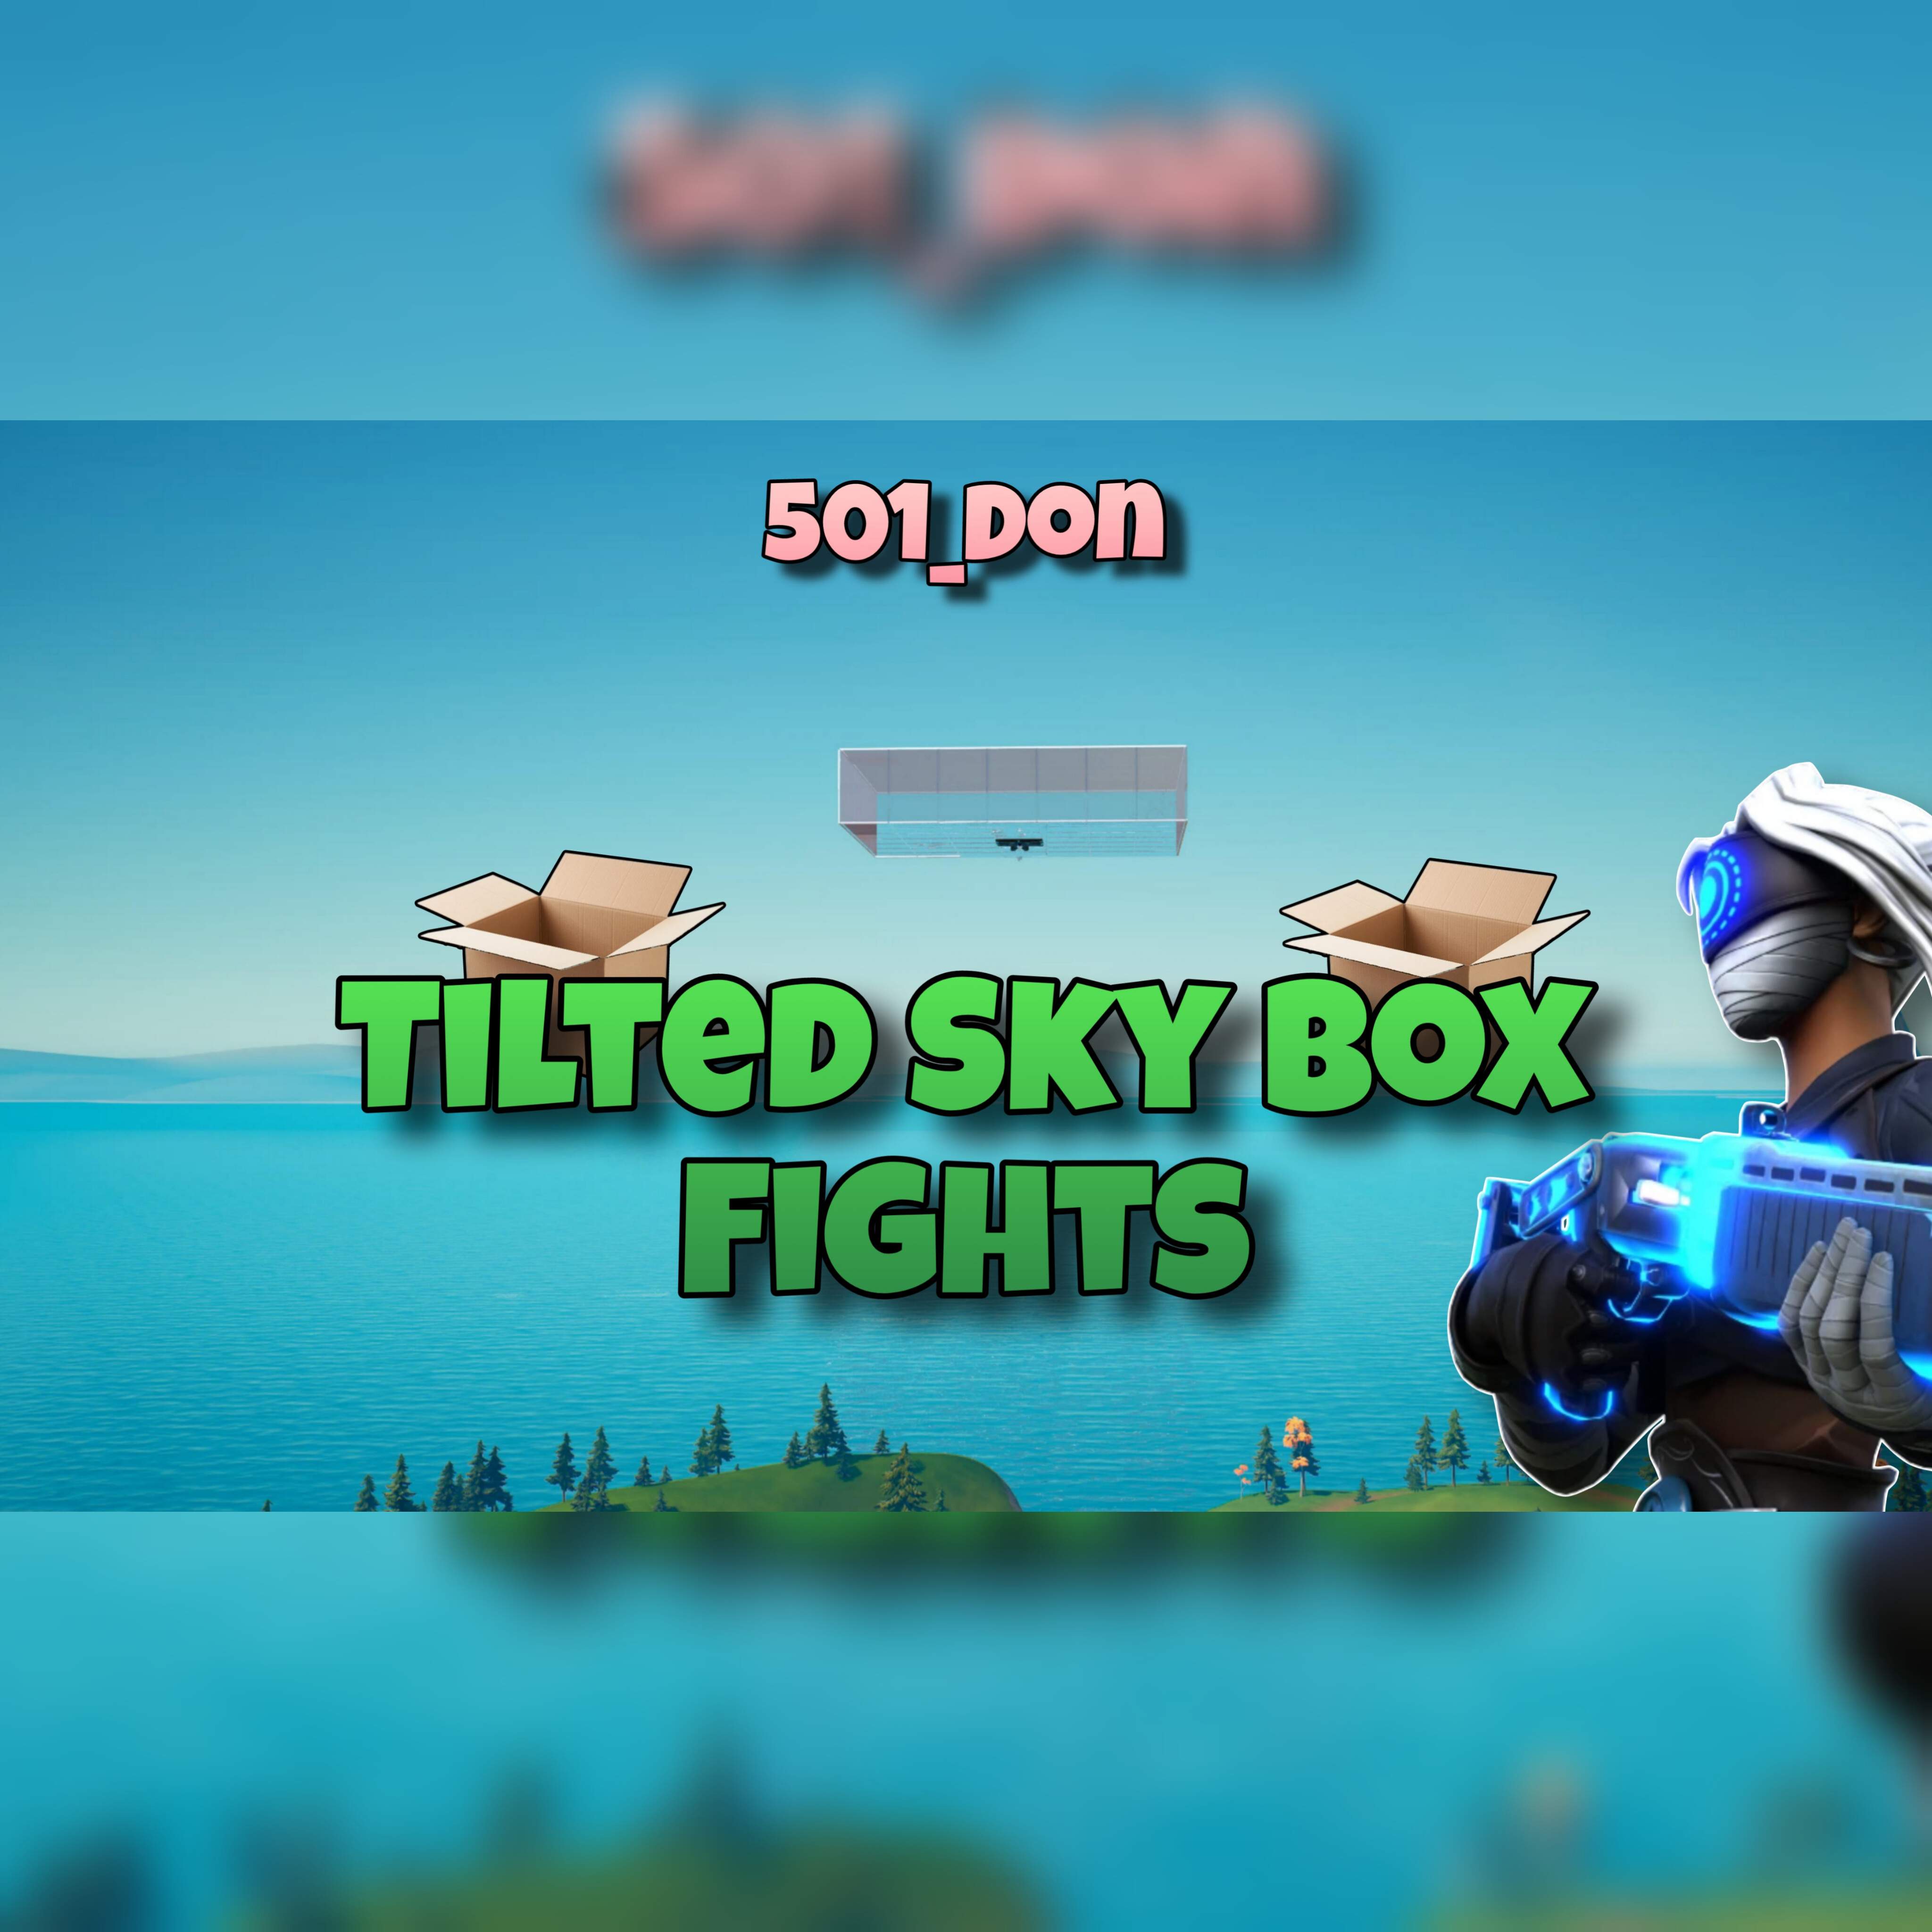 Tilted Sky Box Fights image 2